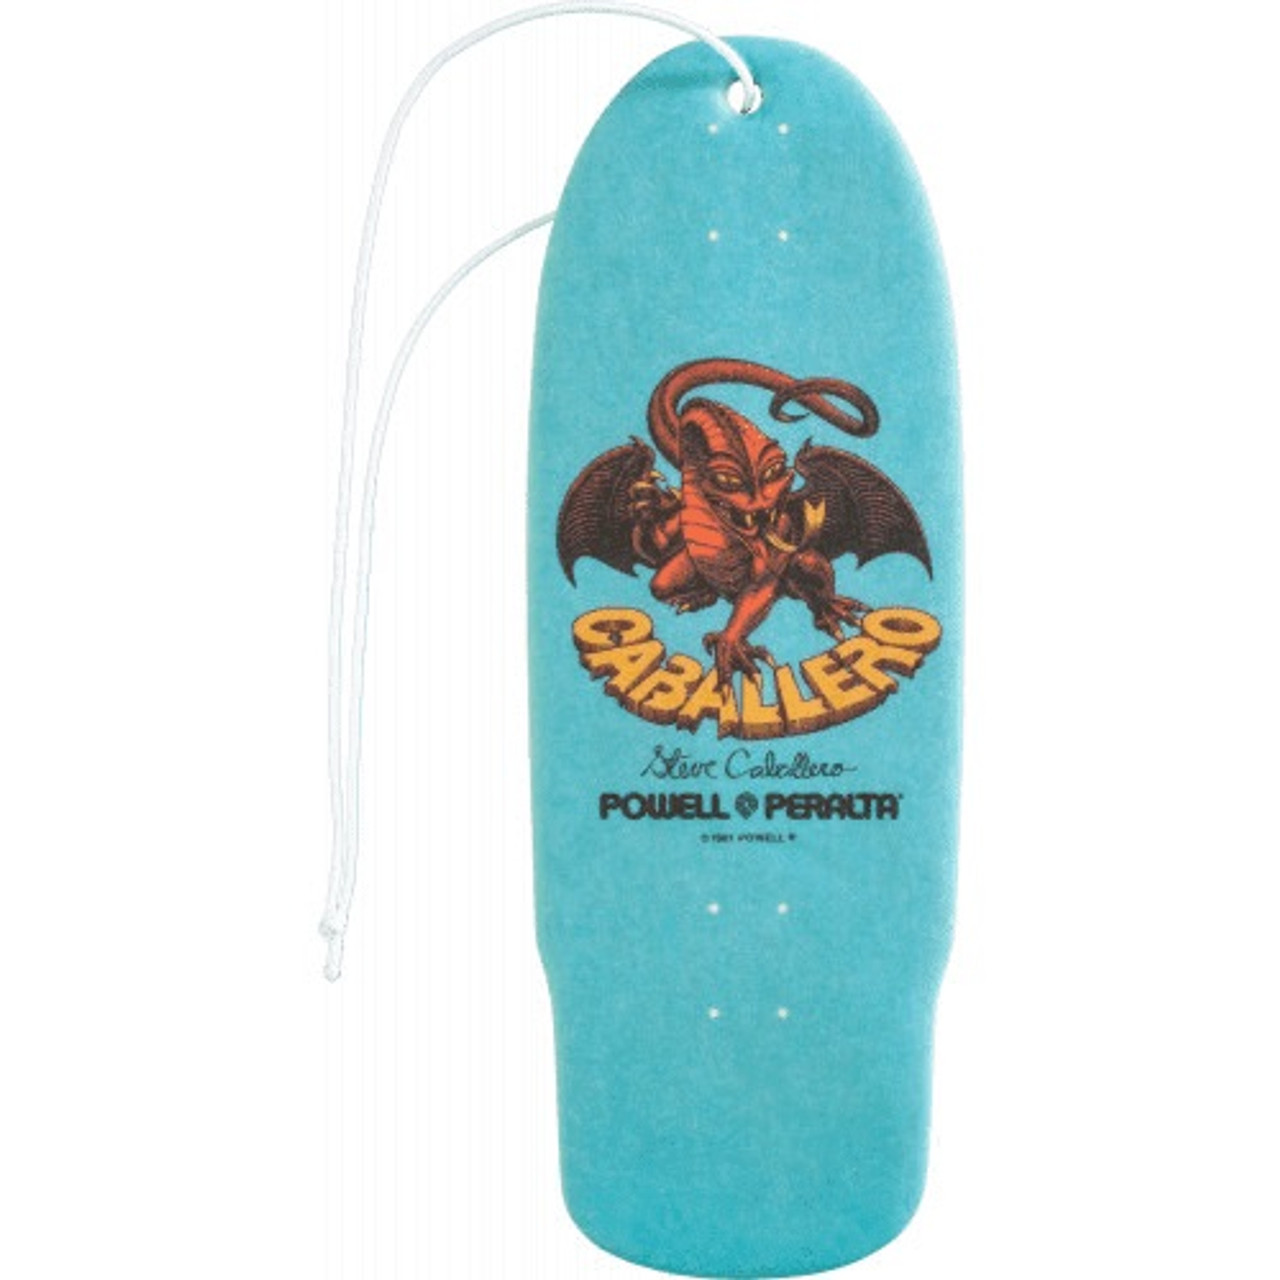 Powell Air Freshener Blue Vanilla